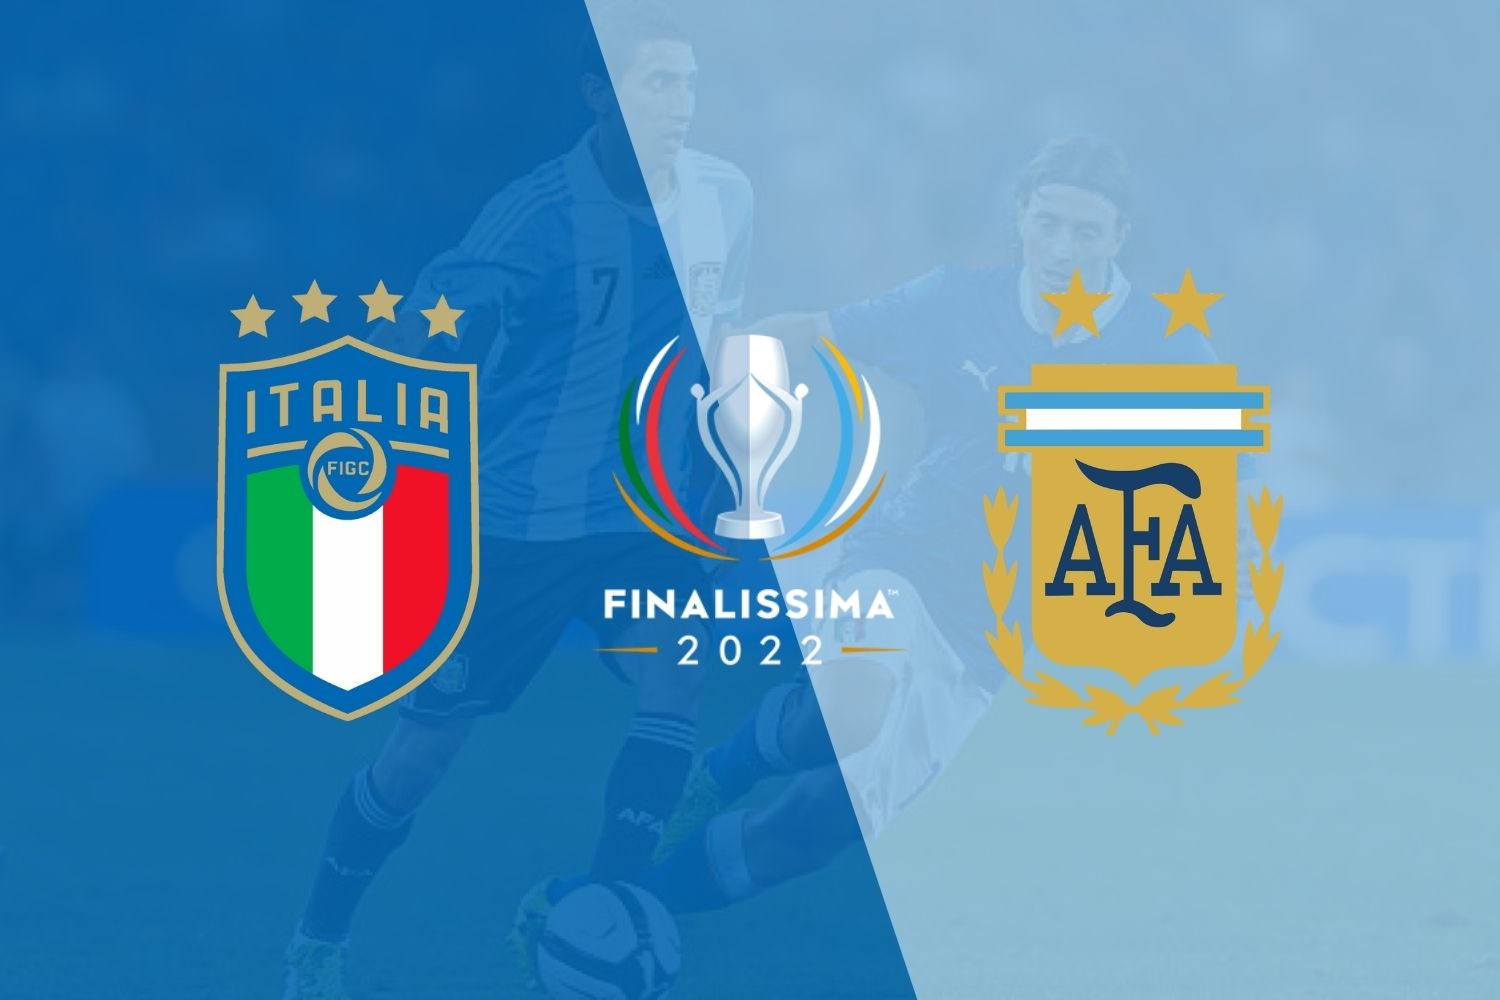 Italy vs Argentina: Finalissima preview & prediction